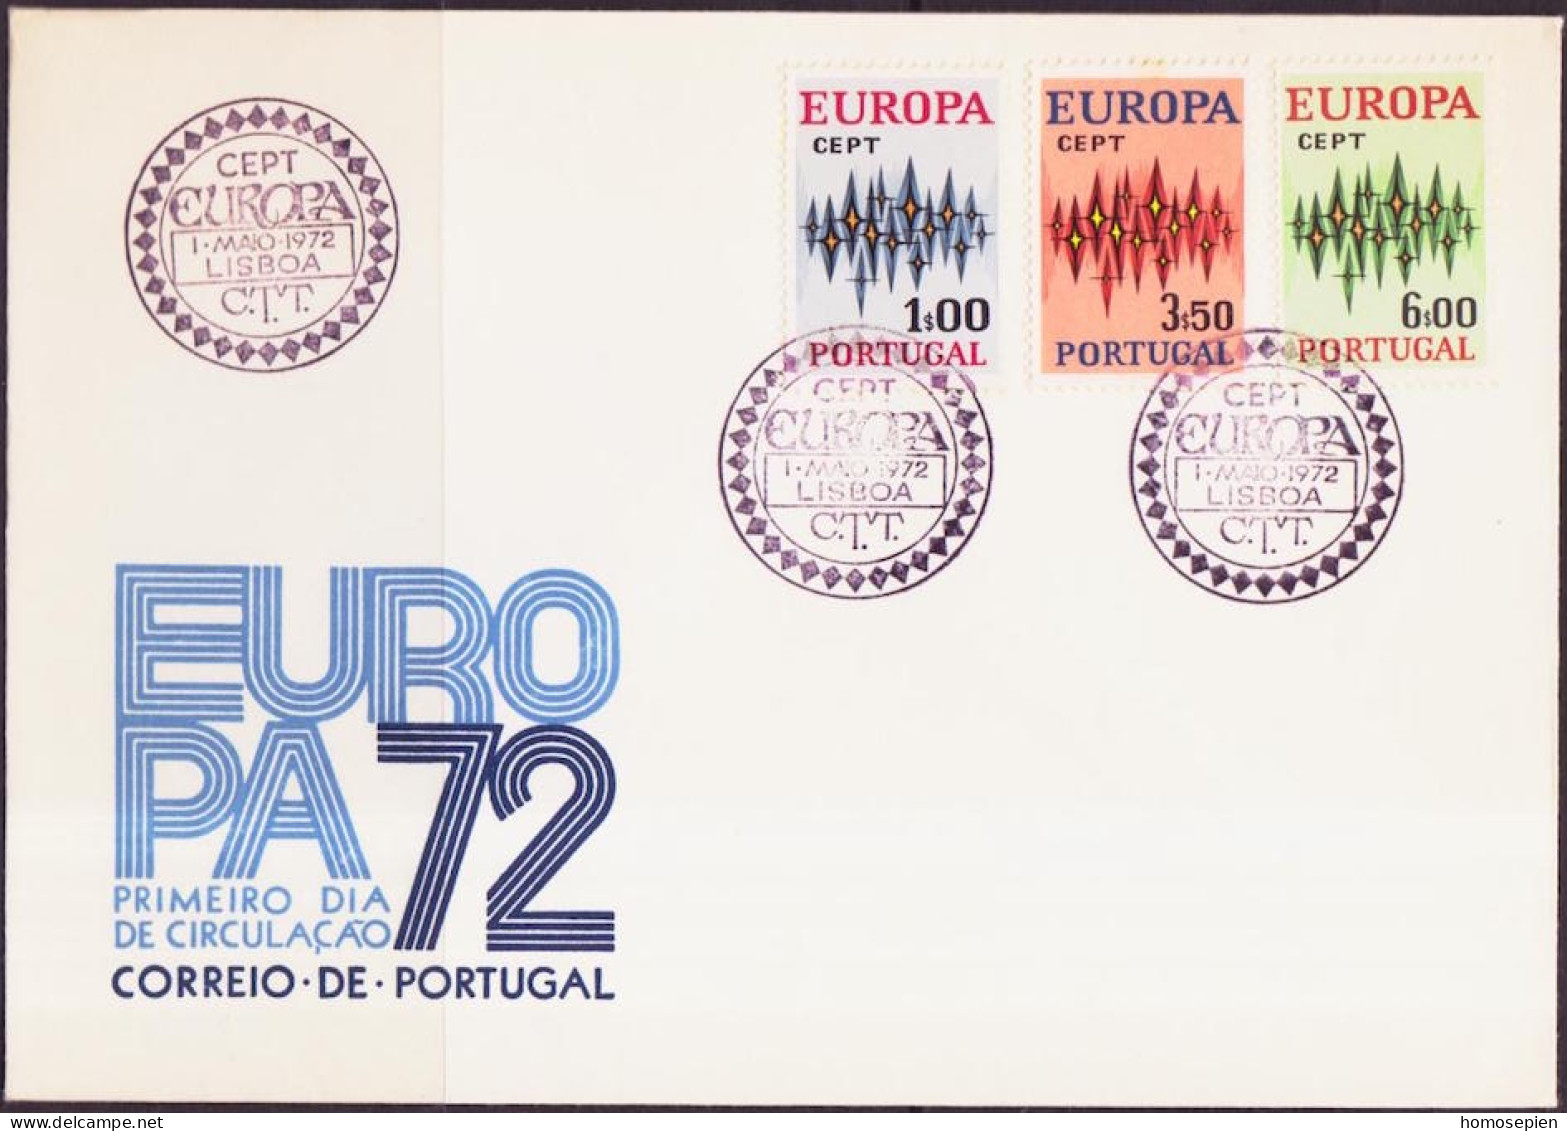 Europa CEPT 1972 Portugal FDC Y&T N°1150 à 1152 - Michel N°1166 à 1168 - 1972